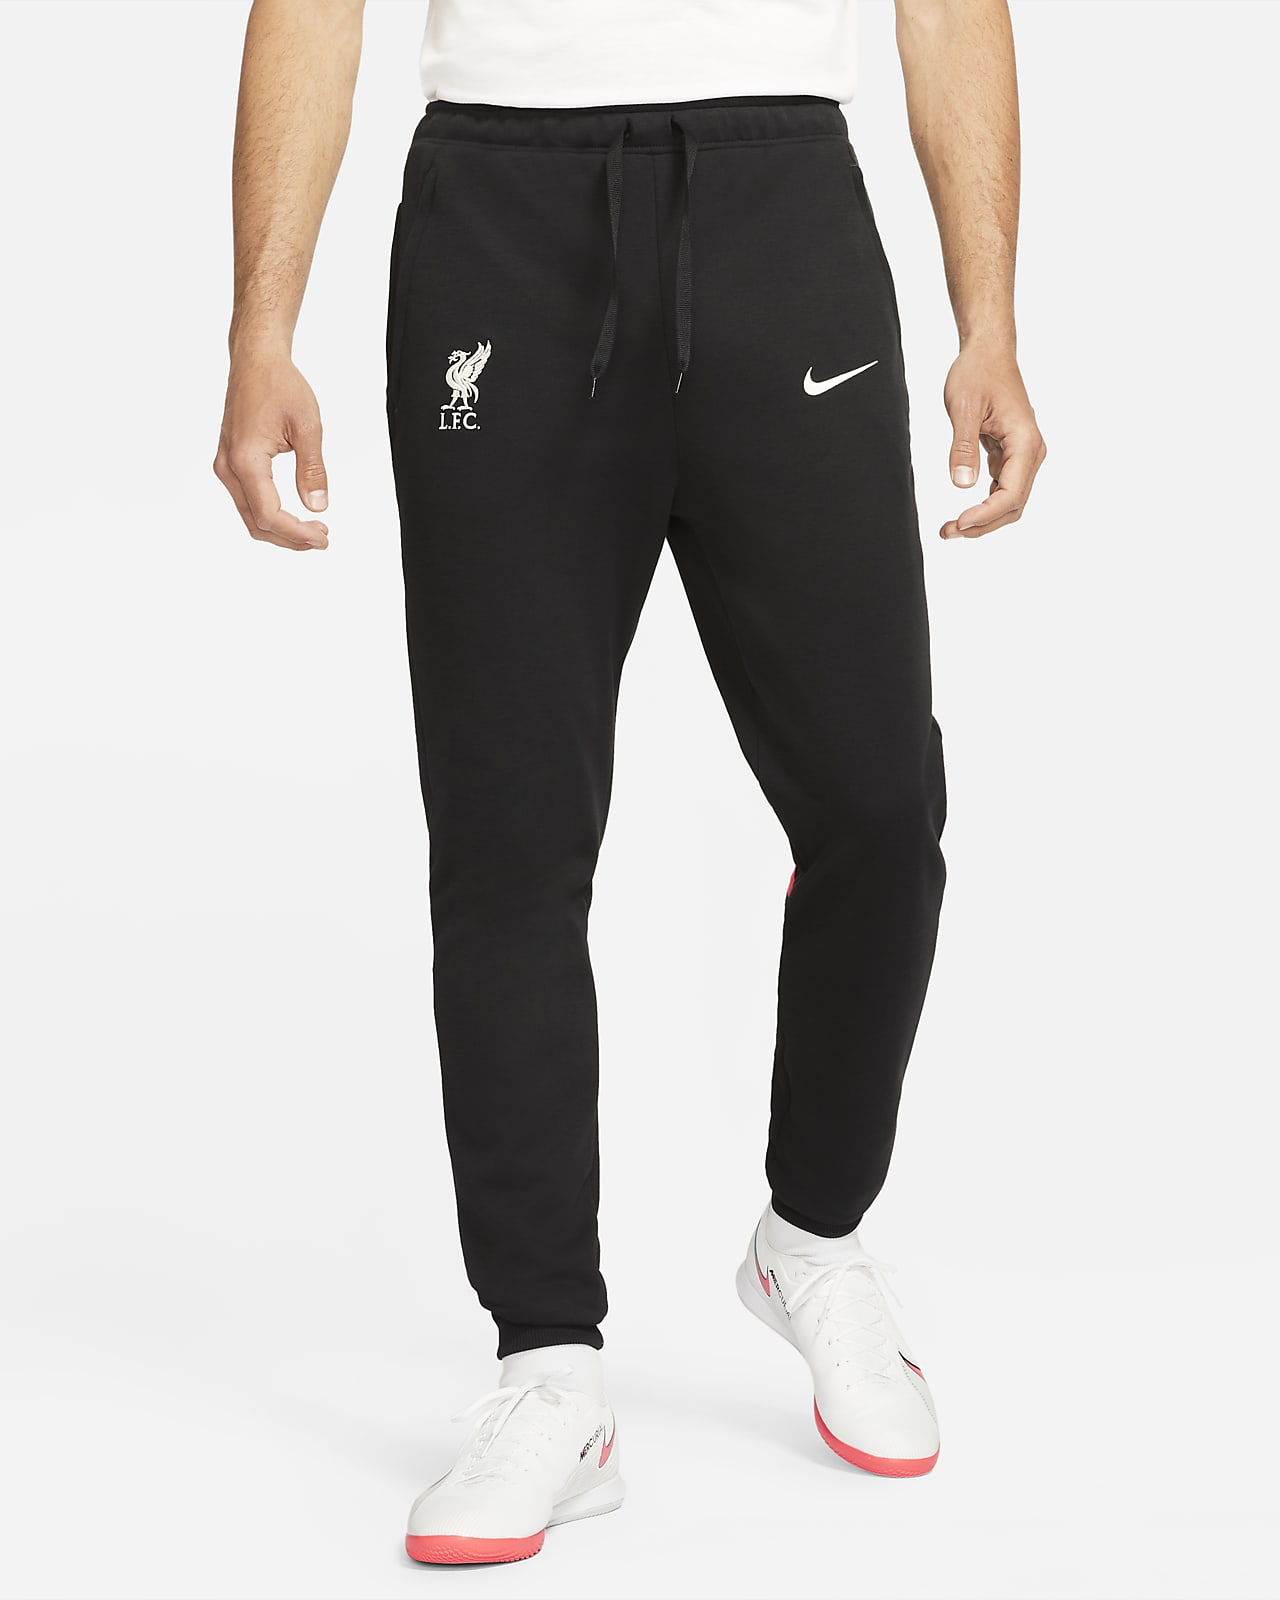 Liverpool F.C. Men's Nike Dri-FIT Football Pants